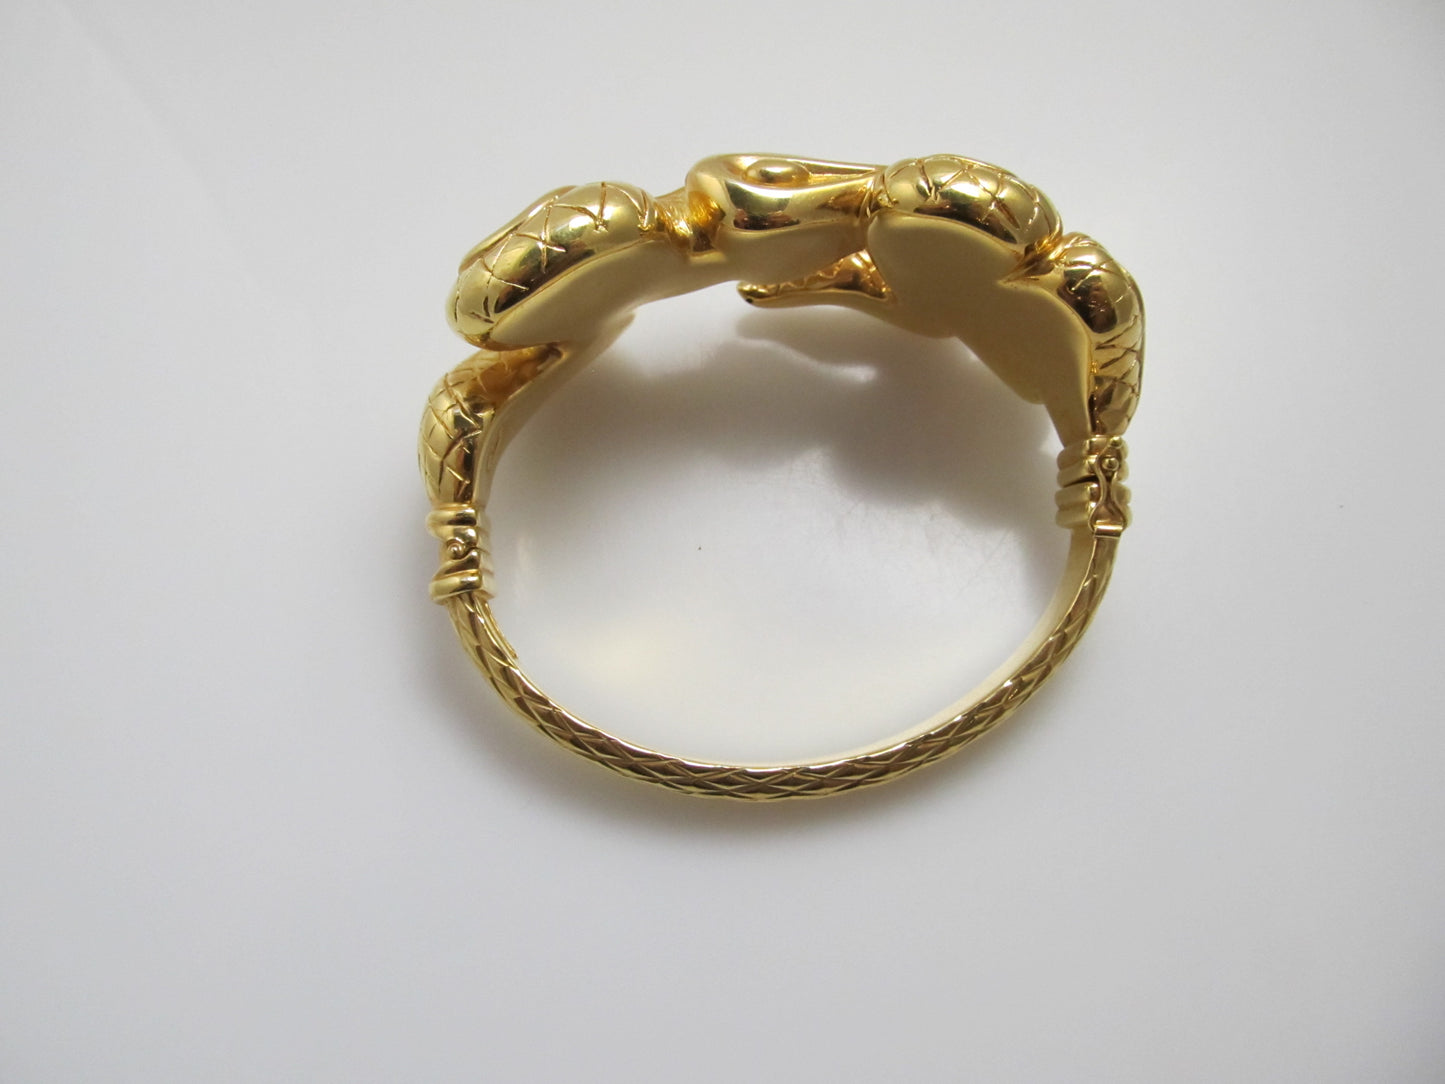 Big 14k yellow gold snake bangle bracelet